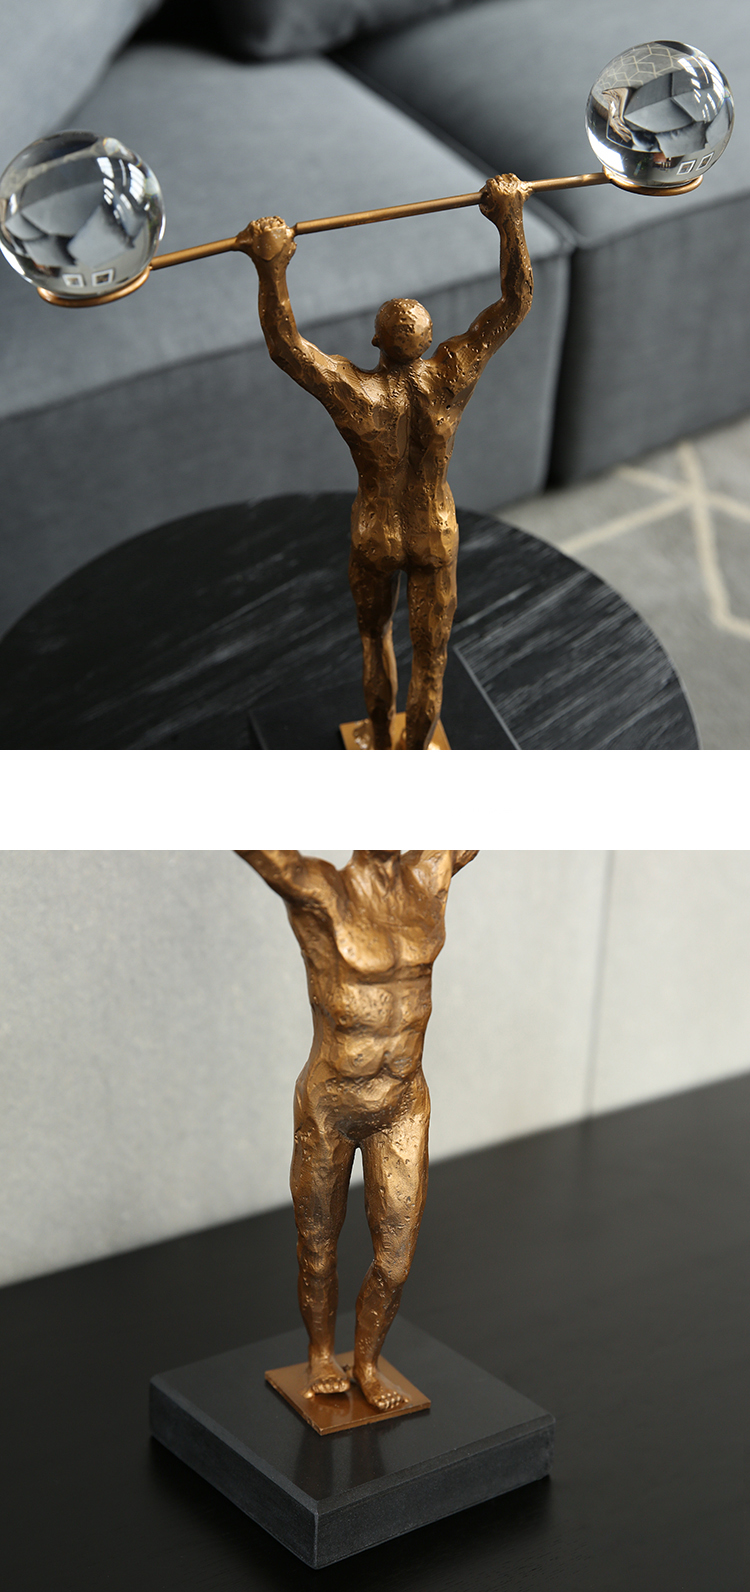 Metal Sports Figure Sculpture Modern Lifting Weights Art Sculpture Statues For Home Decor Craft Figurine Marble Ornament Office